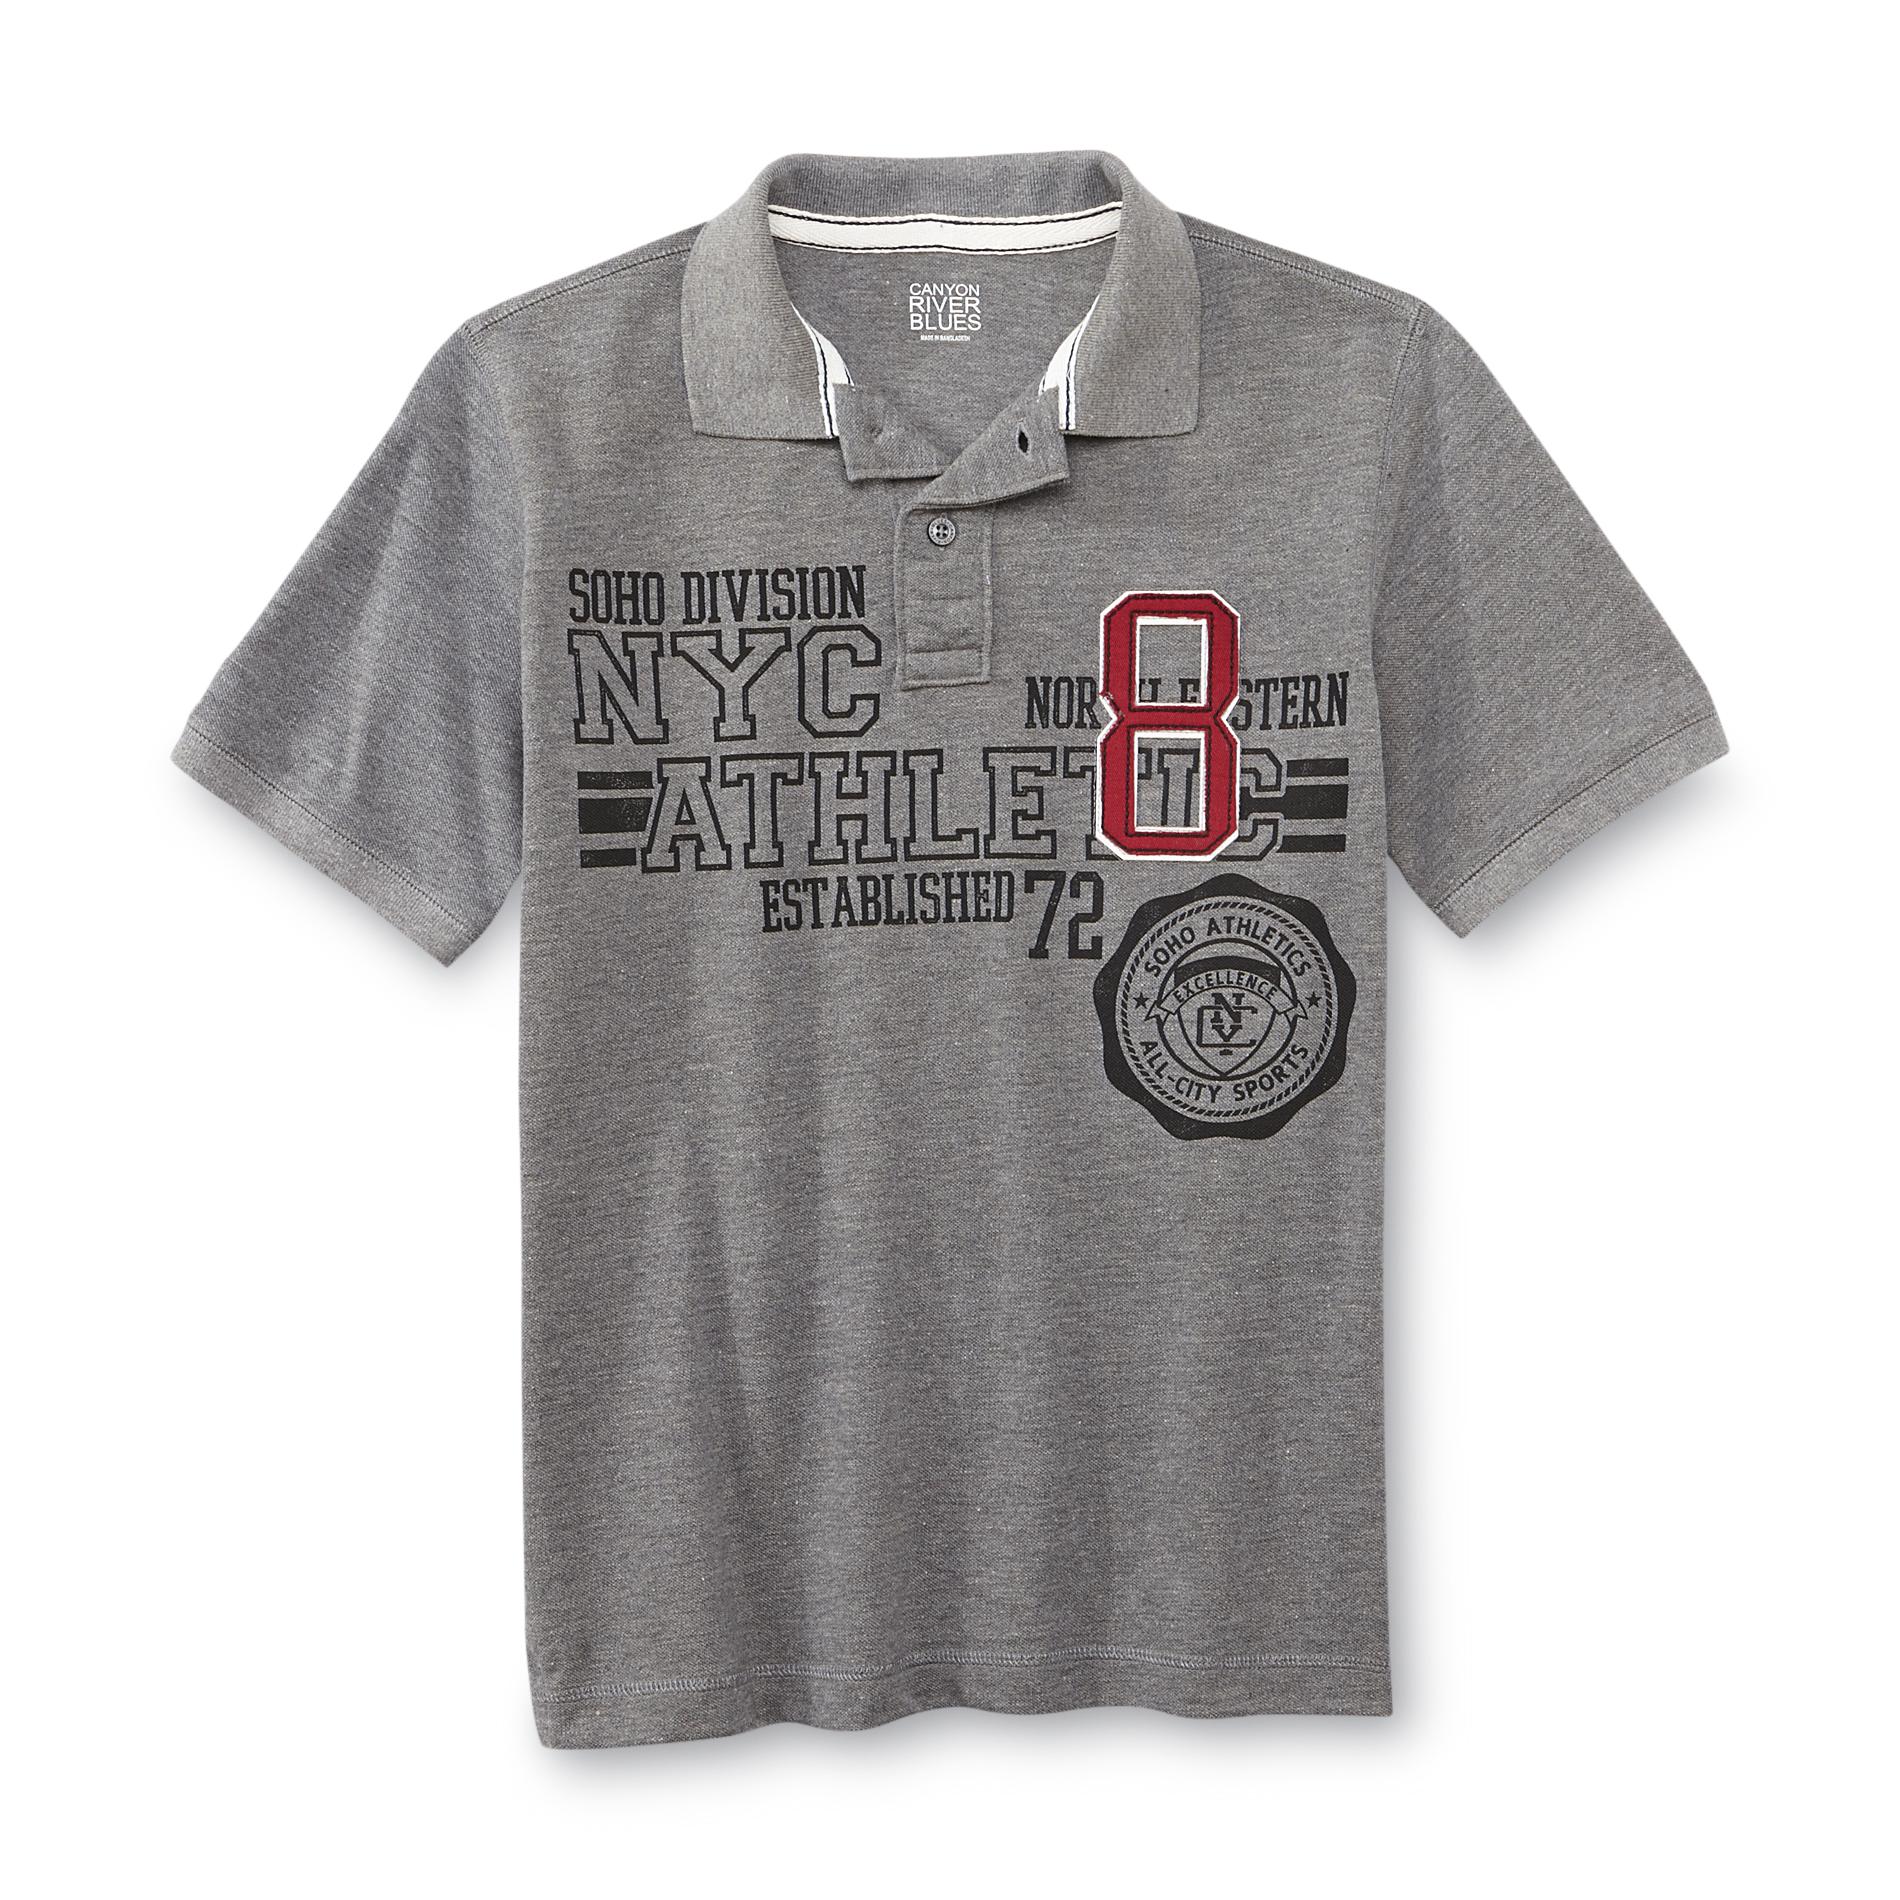 Canyon River Blues Boy's Graphic Polo Shirt - NYC Athletics